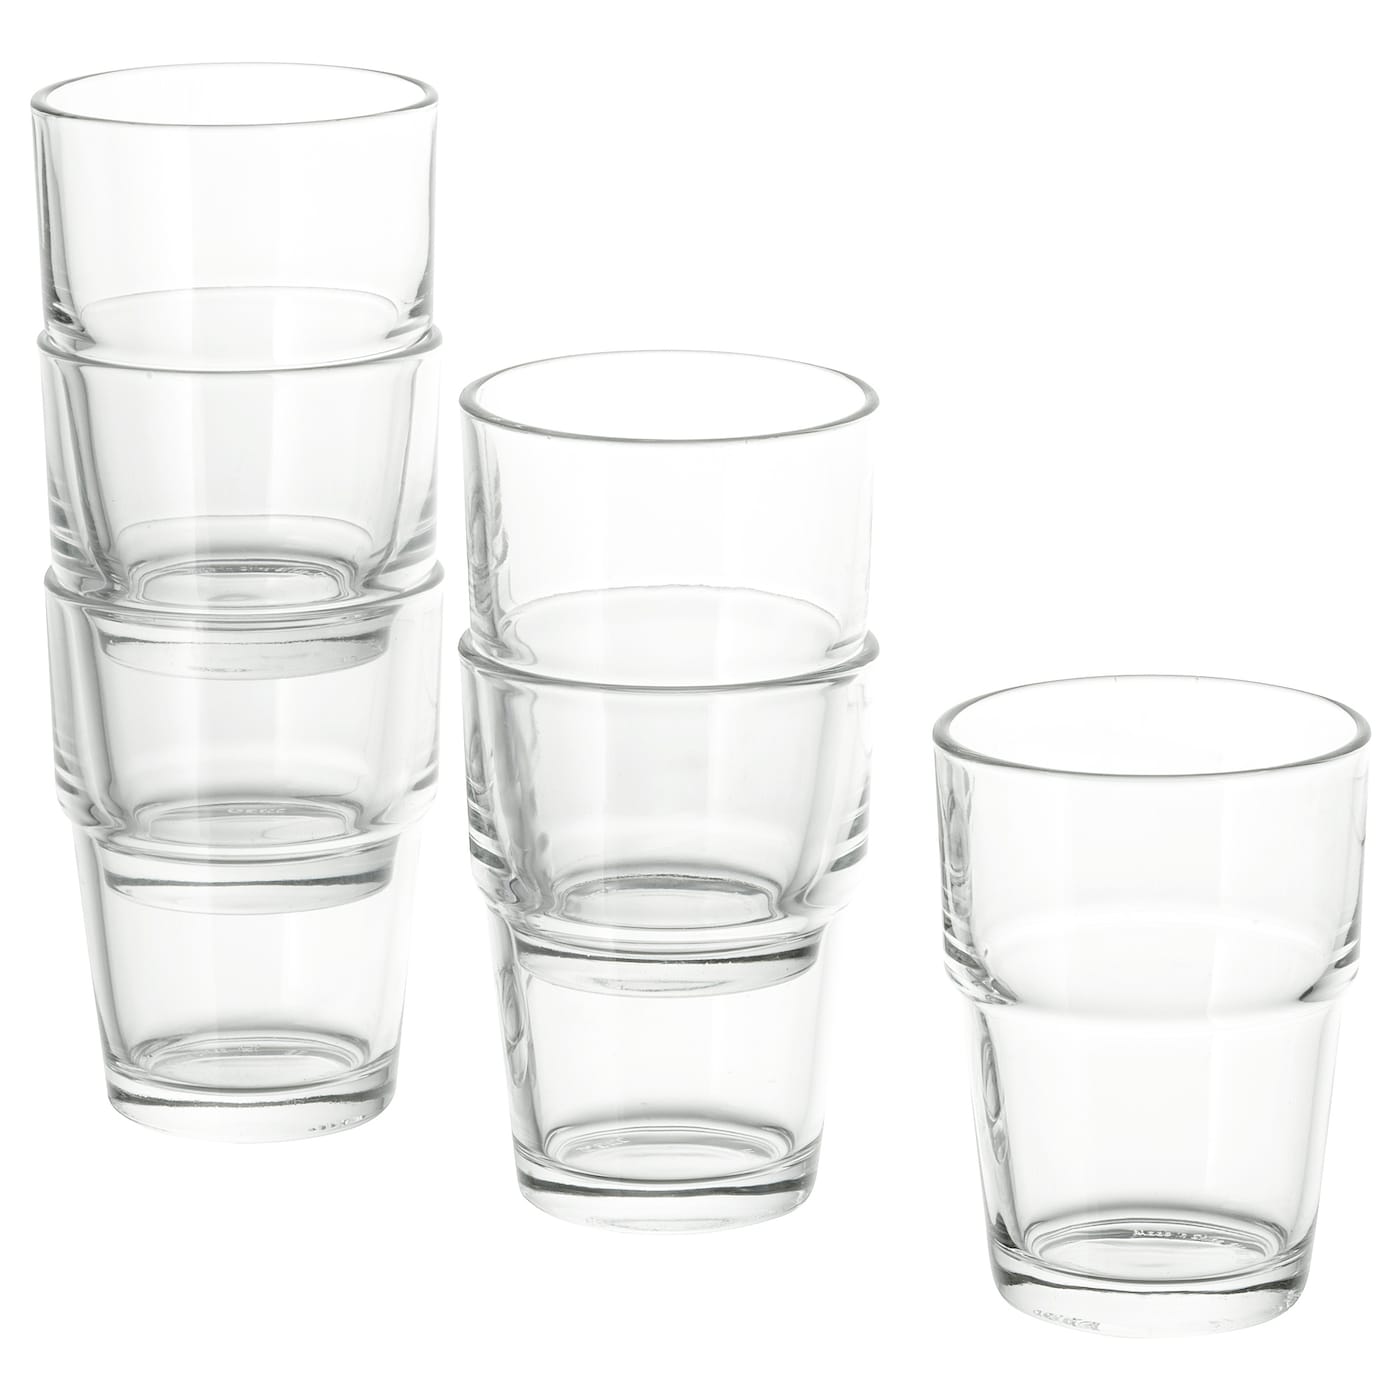 Набор стаканов, 6 шт. - IKEA REKO, 170 мл, прозрачное стекло, РЕКО ИКЕА